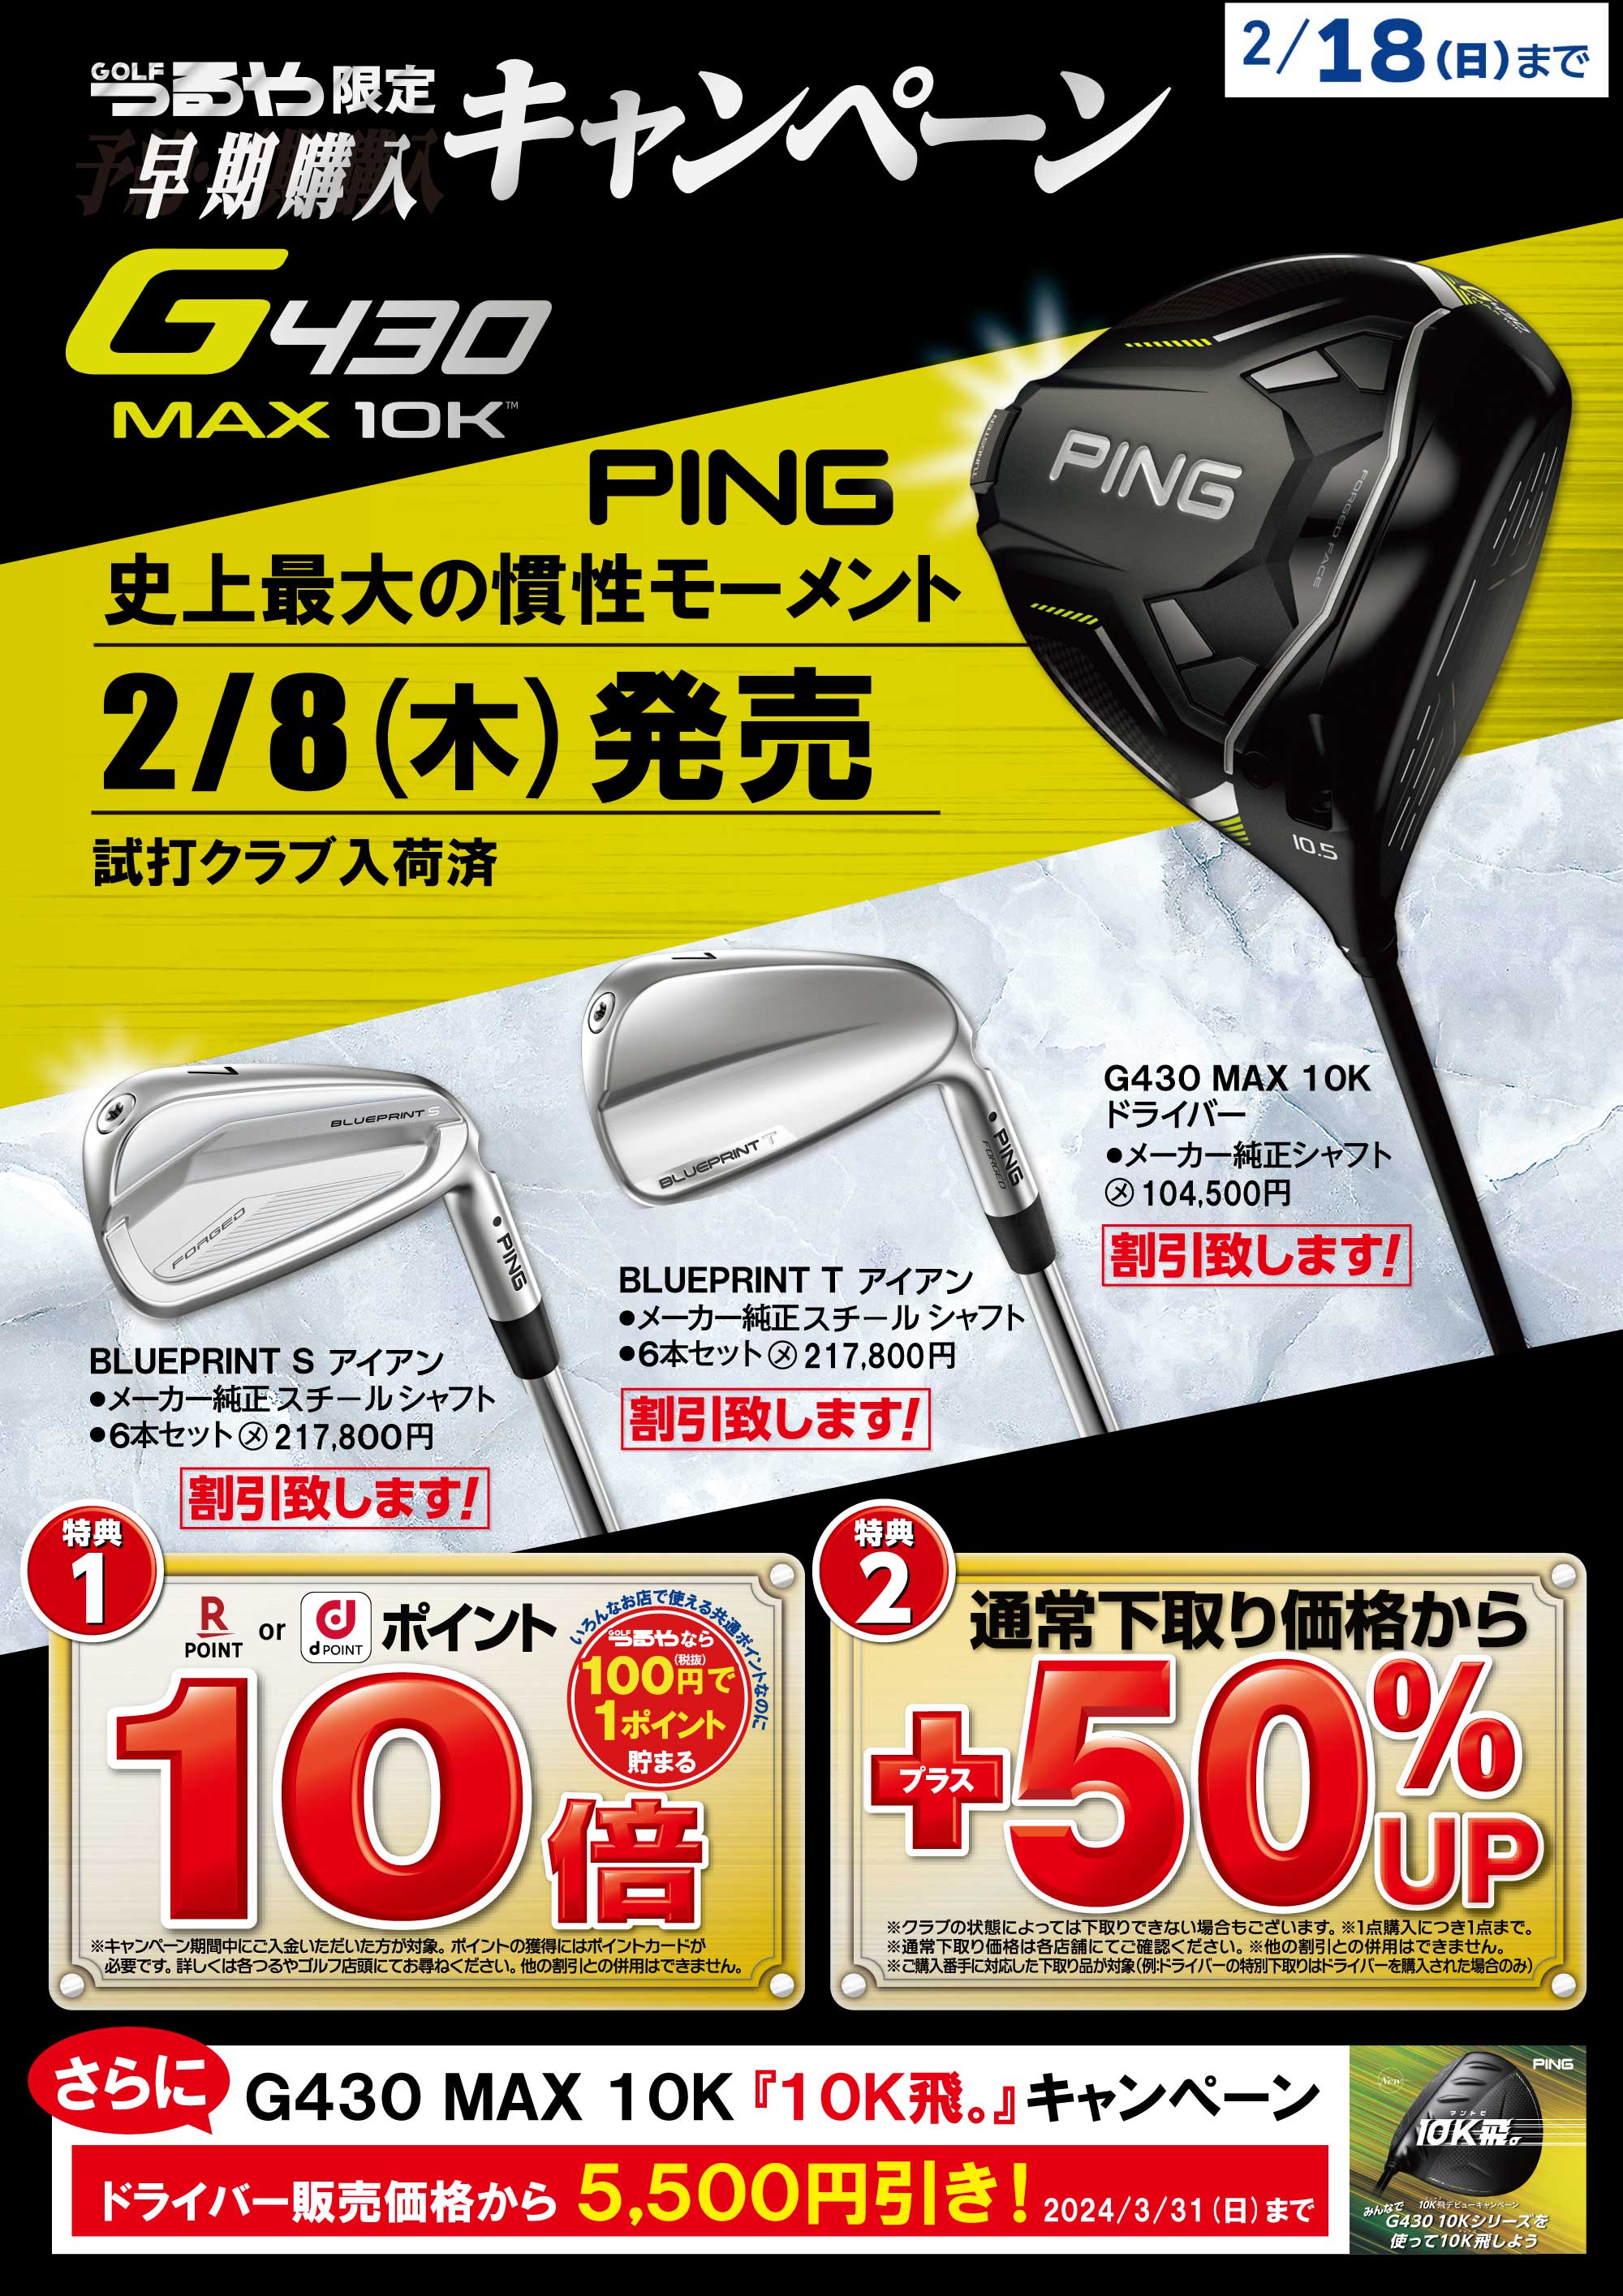 PING G430 MAX 10K & ブループリントSアイアン ついに発売